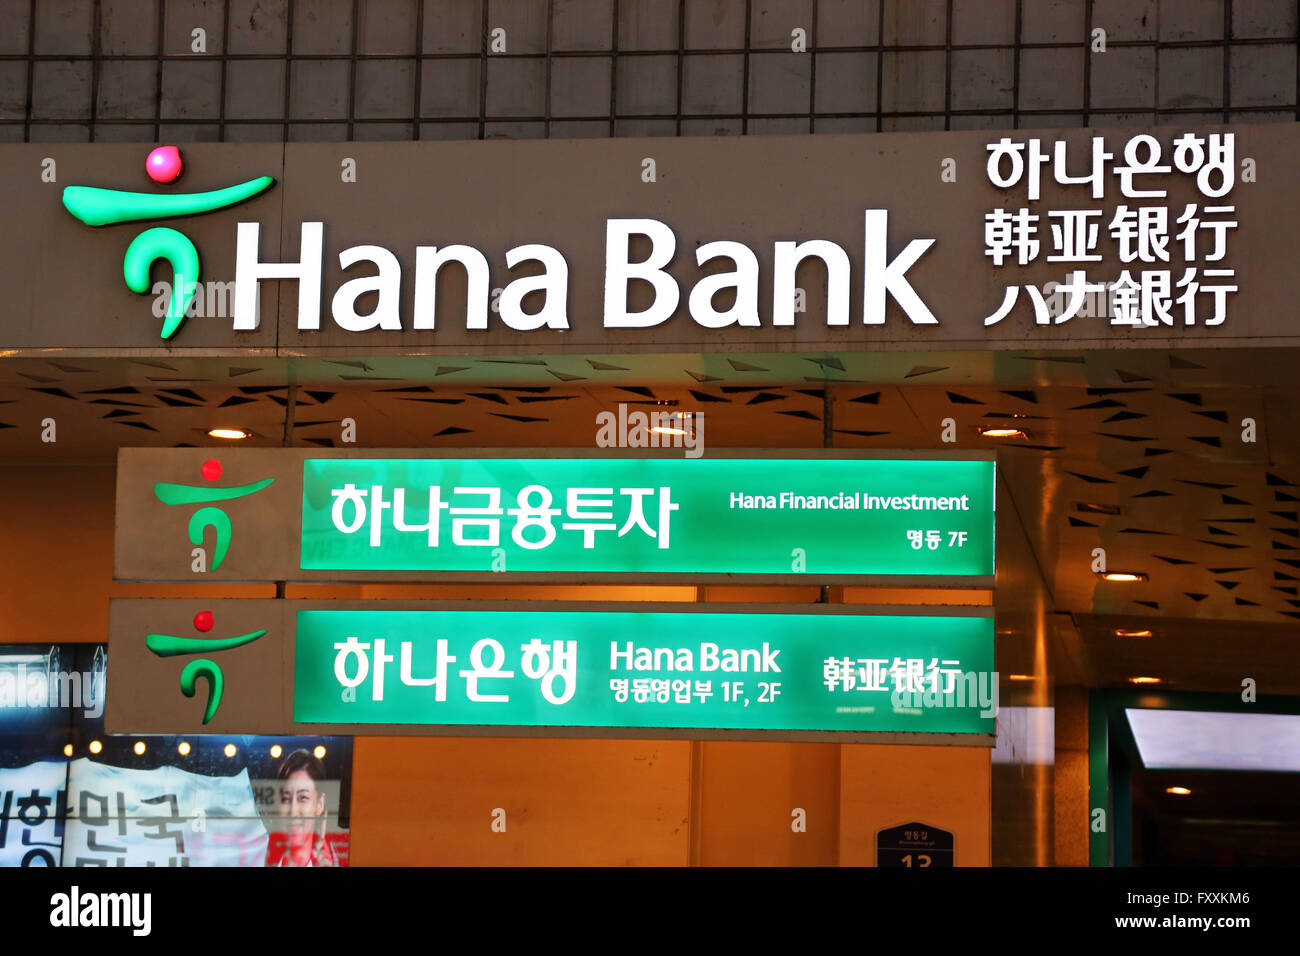 Hana Bank sign in Seoul, Korea Stock Photo